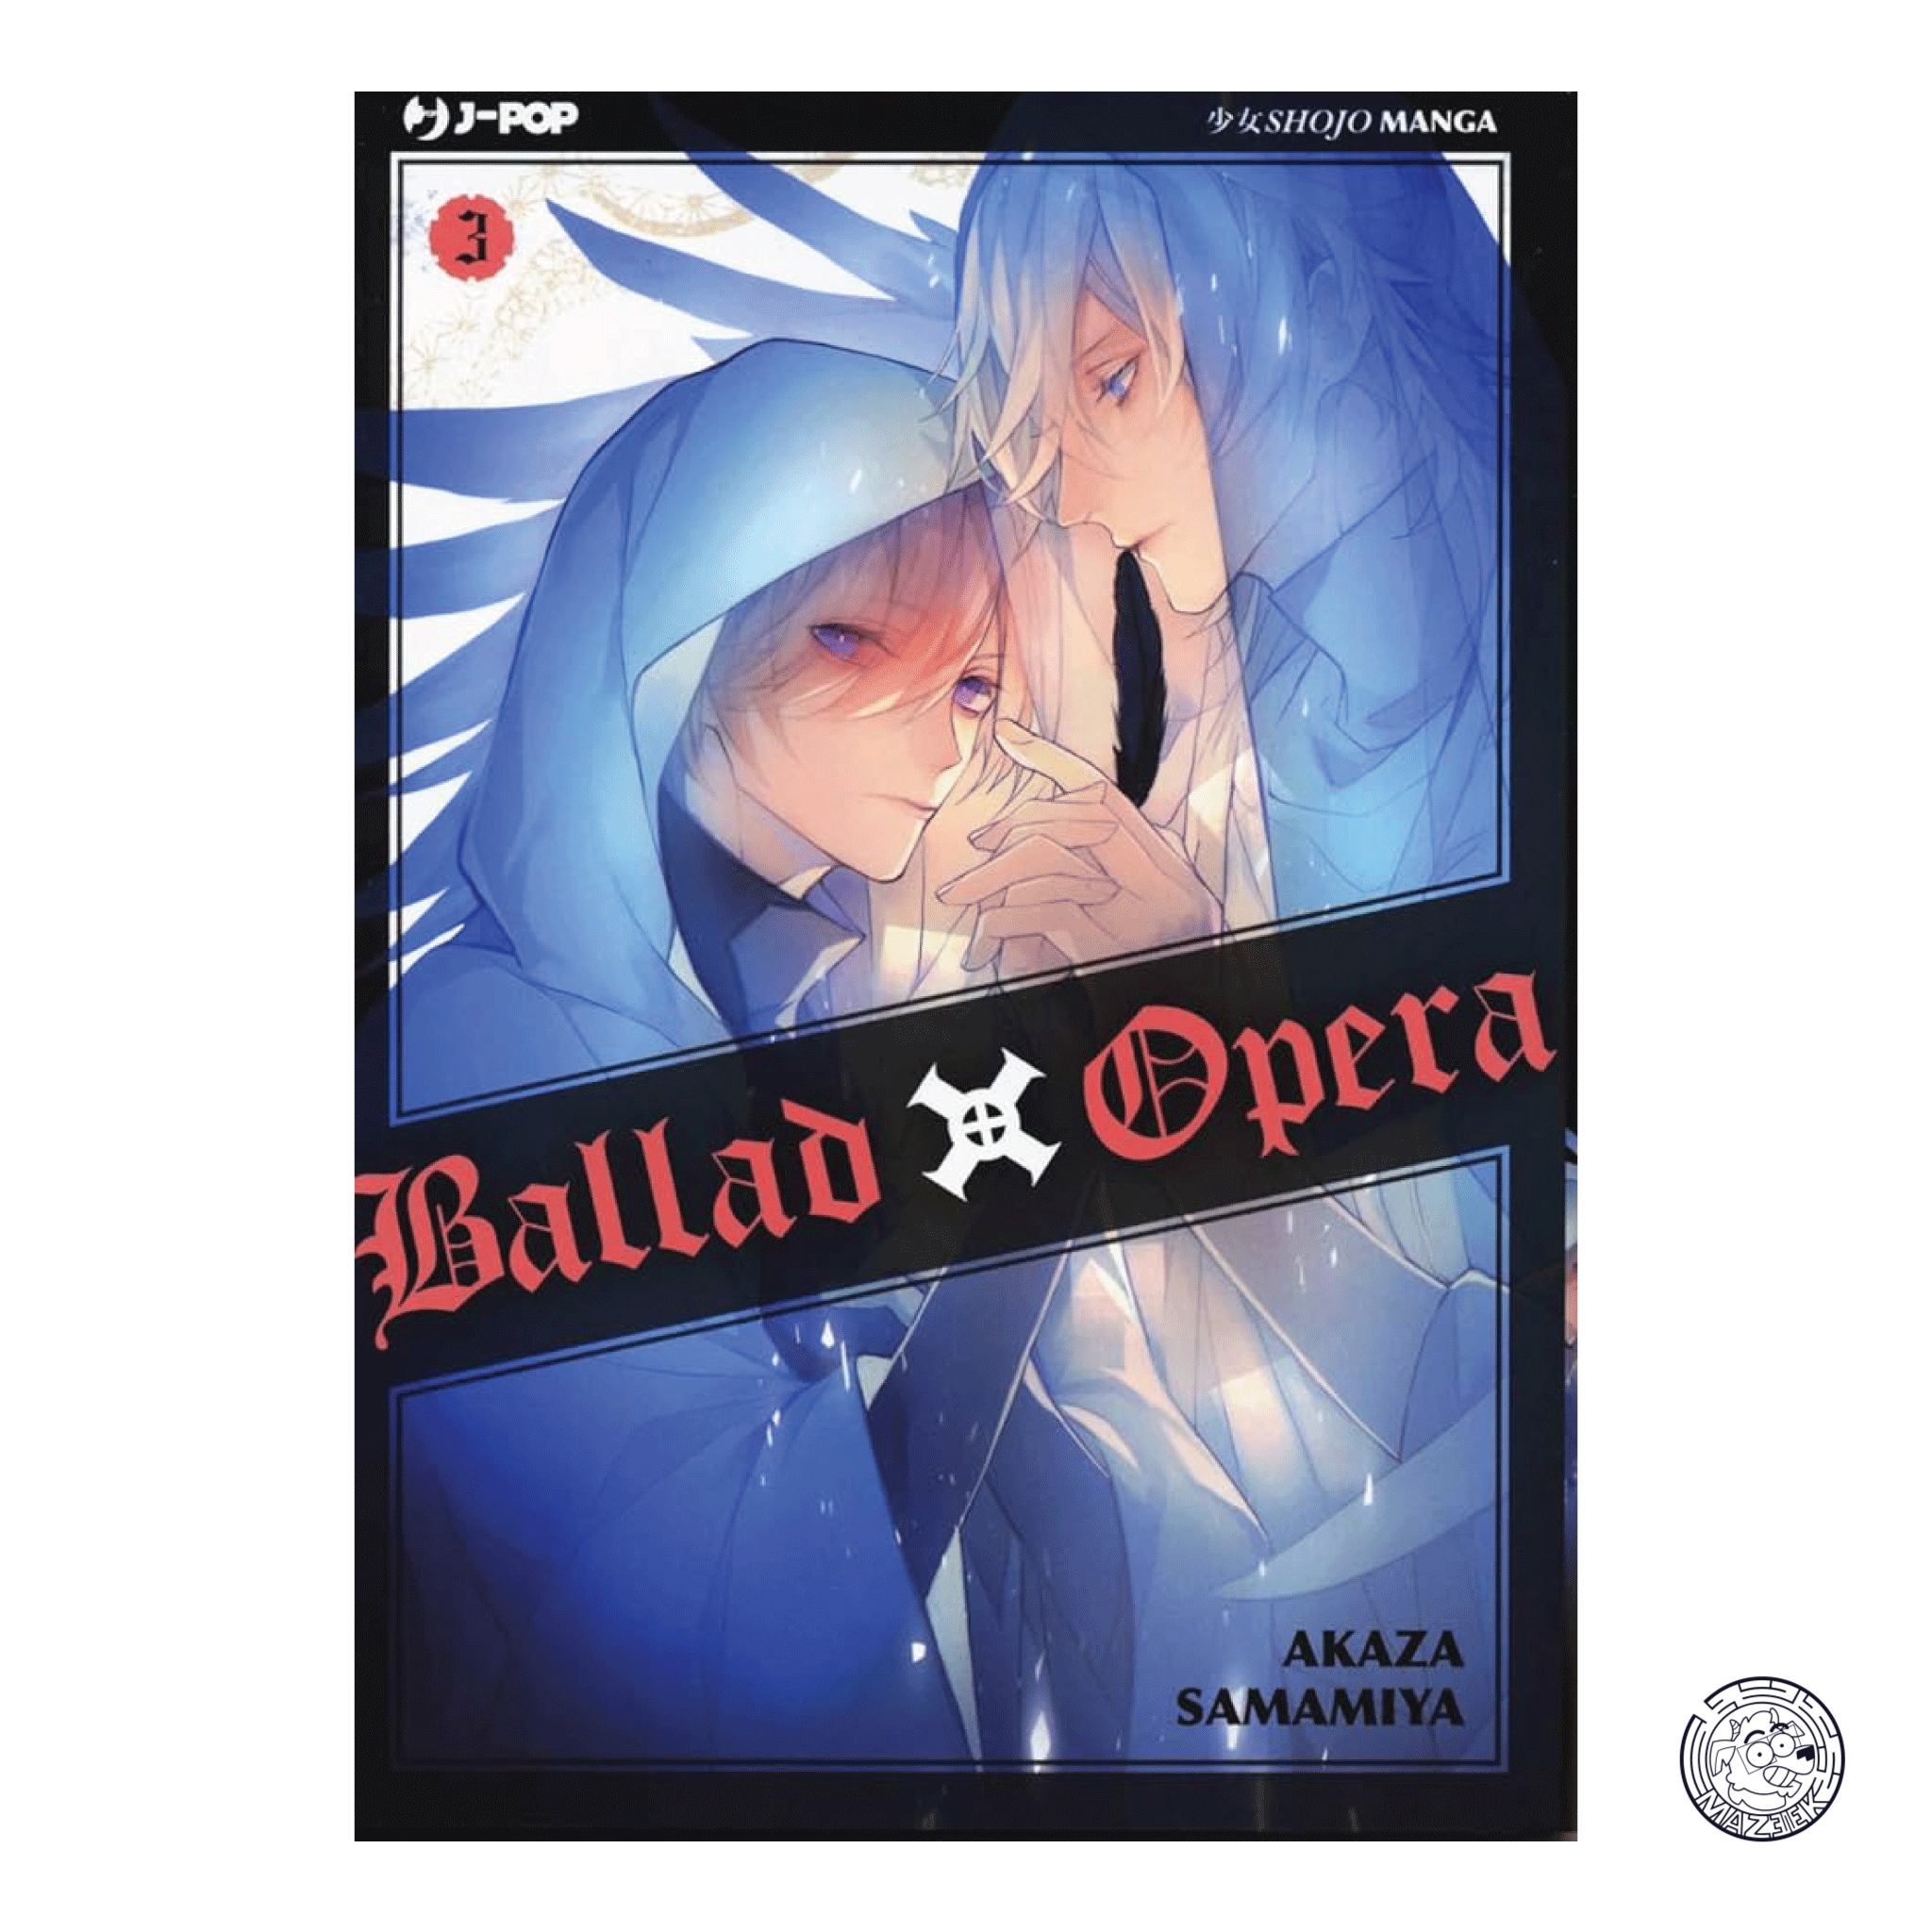 Ballad X Opera 03